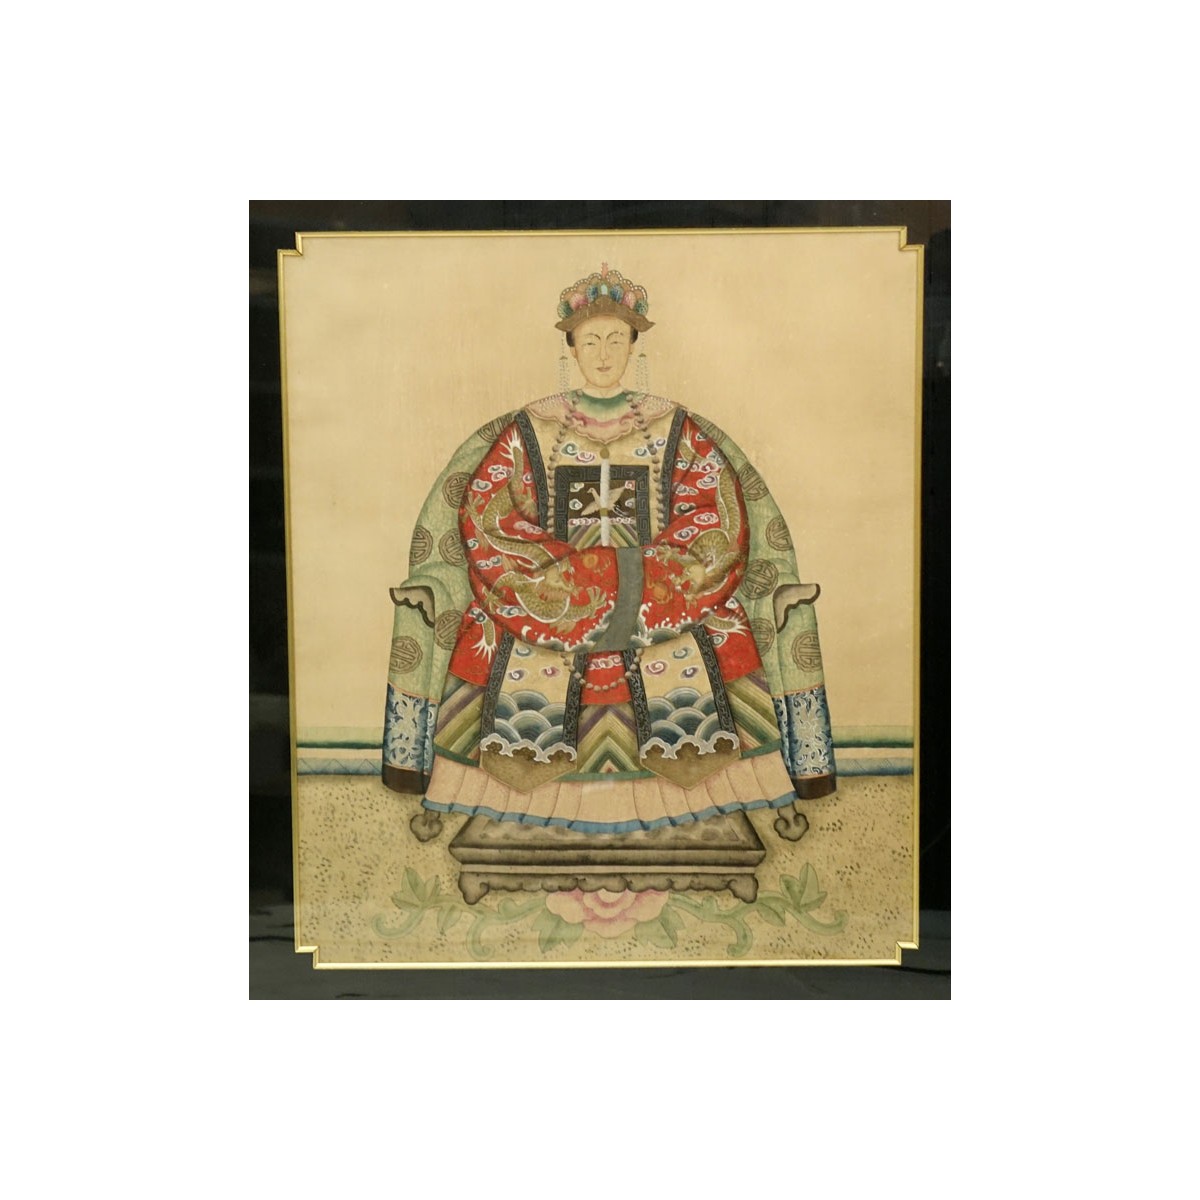 Pr Chinese Watercolors On Silk Emperor & Empress